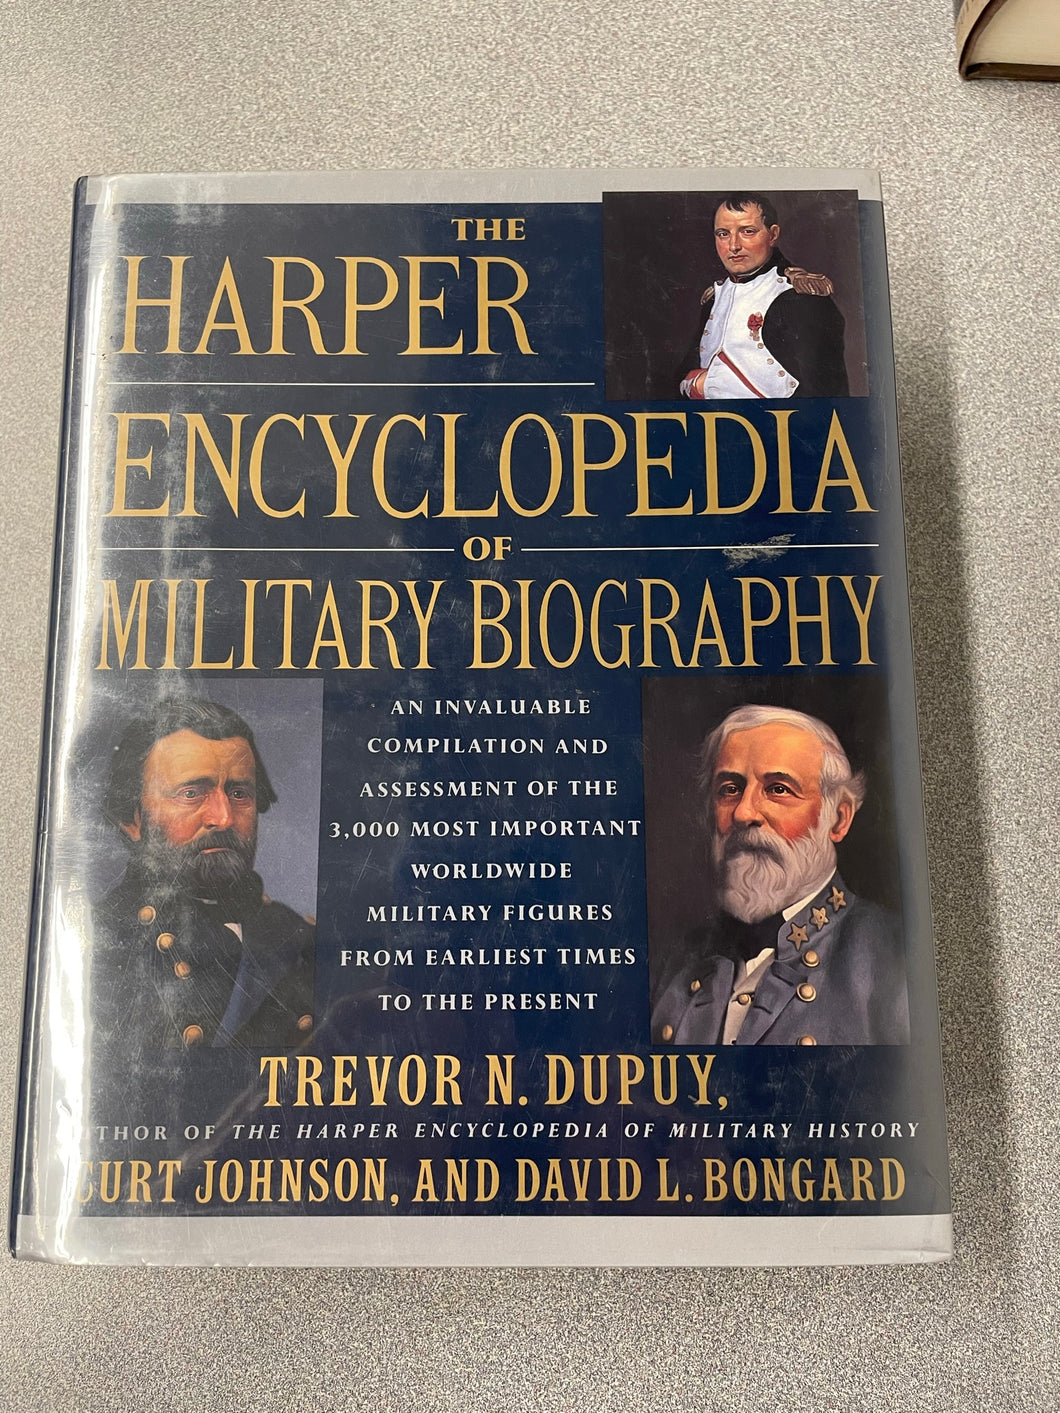 The Harper Encyclopedia of Military Biography, Dupuy, Trevor N., et al [1992] ML 9/23